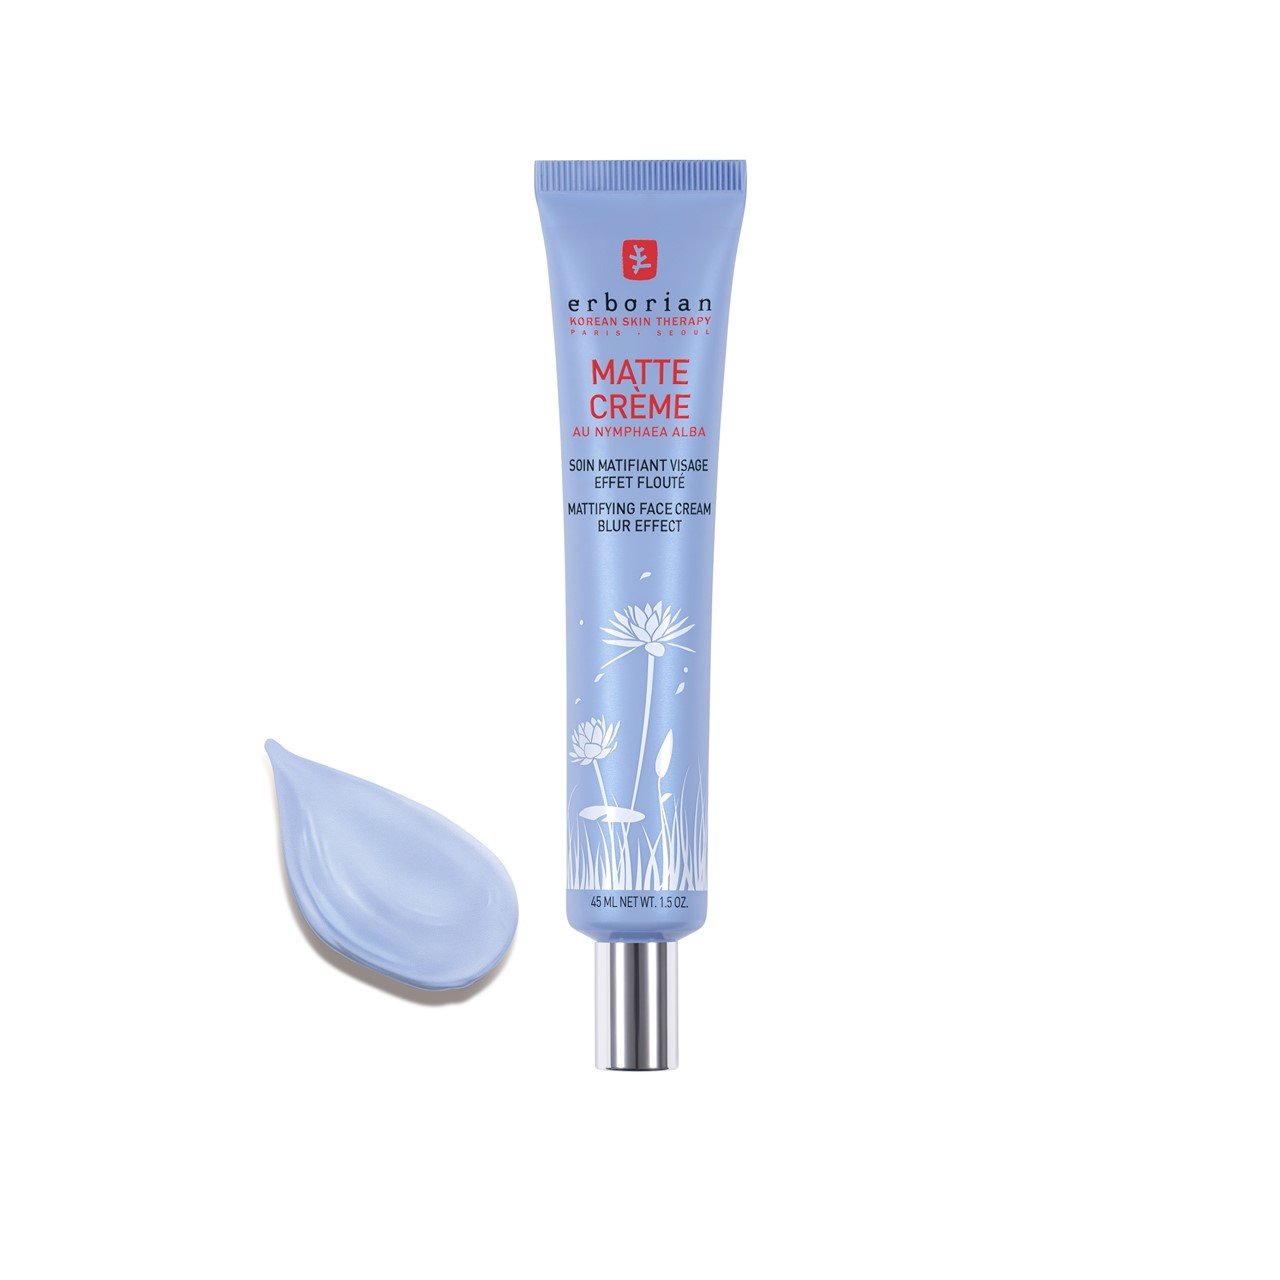 Buy Erborian Matte Crème Mattifying Face Cream Blur Effect 45ml (1.52fl ·